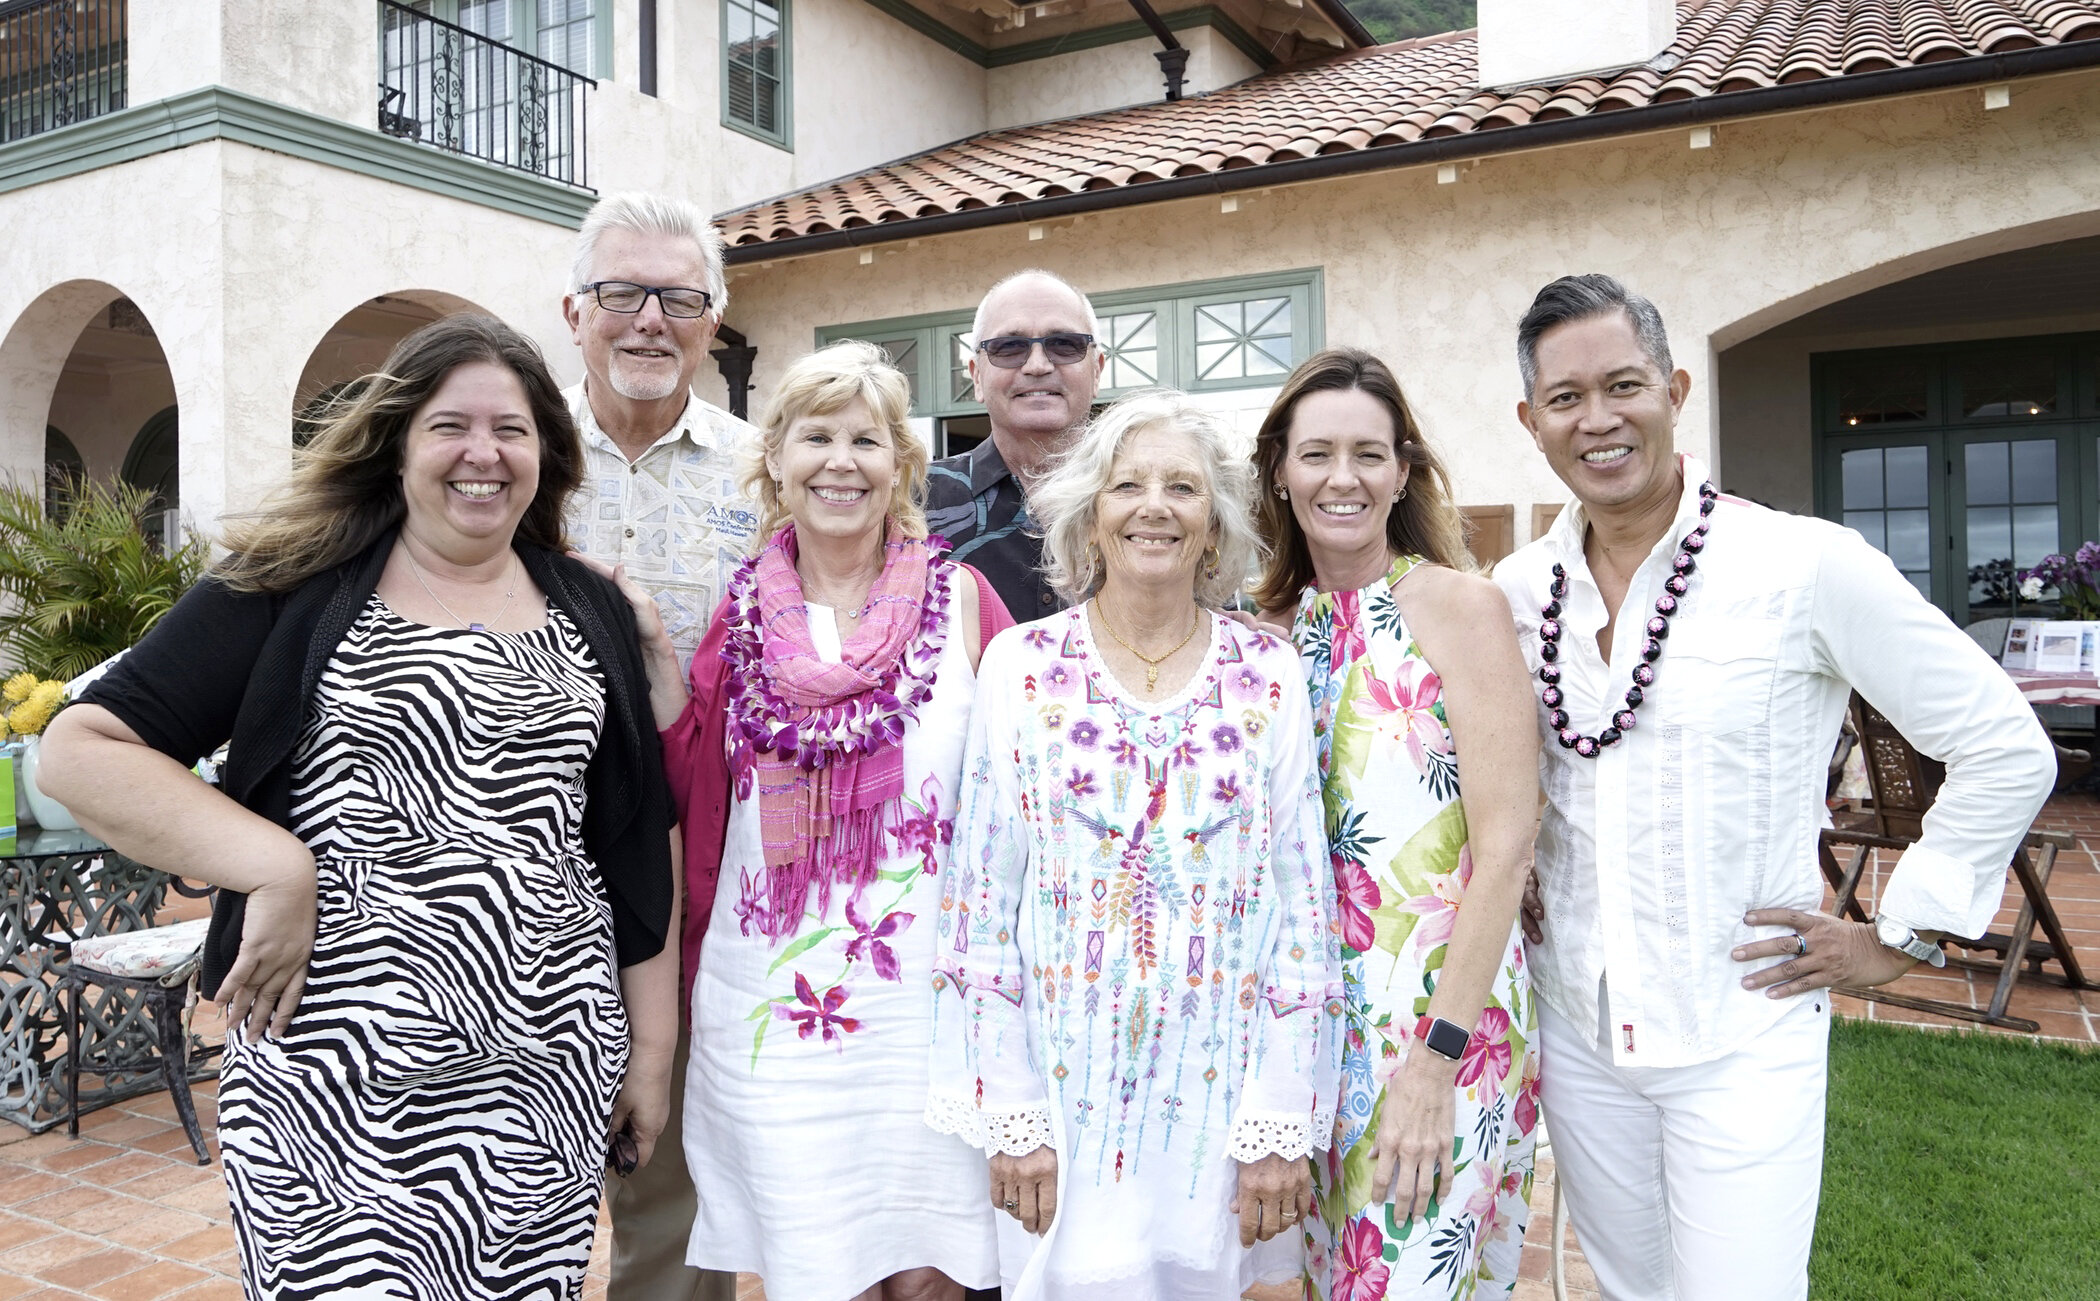  High tea guests (pictured from left): Kim Sloan, John Harrison, Gretchen "Gigi" Voxland, Daniel Schiesser, Doris Lang, Kim Morris, Randy Antonio. 